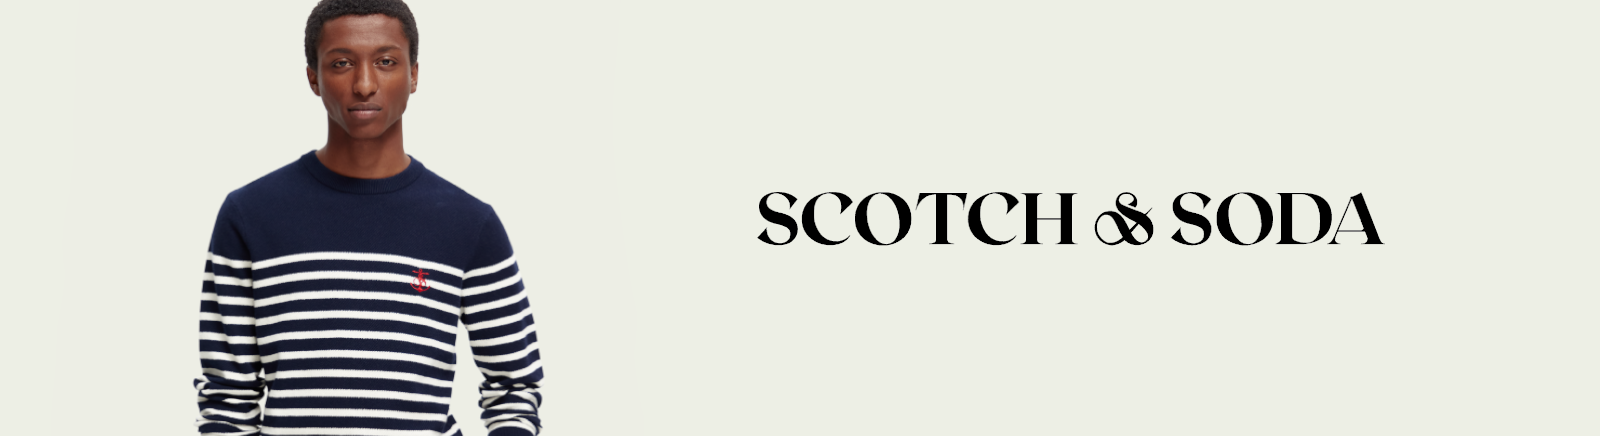 Scotch & Soda Herrenschuhe online shoppen im Juppen Shop